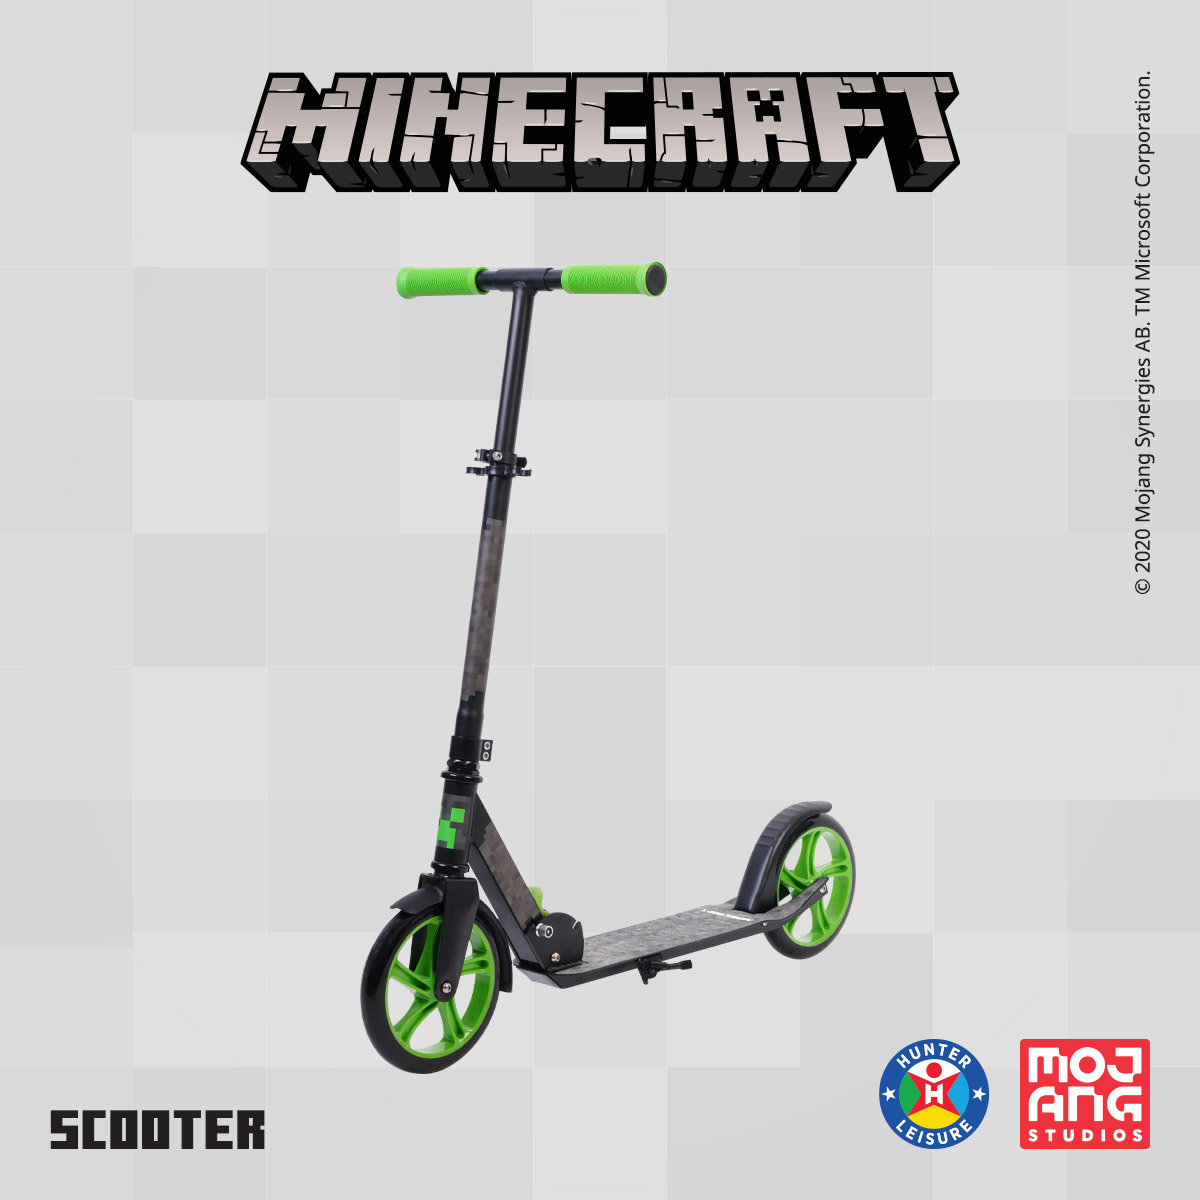 www.hunterleisure.com.au Minecraft Scooter Big W Hunter Leisure